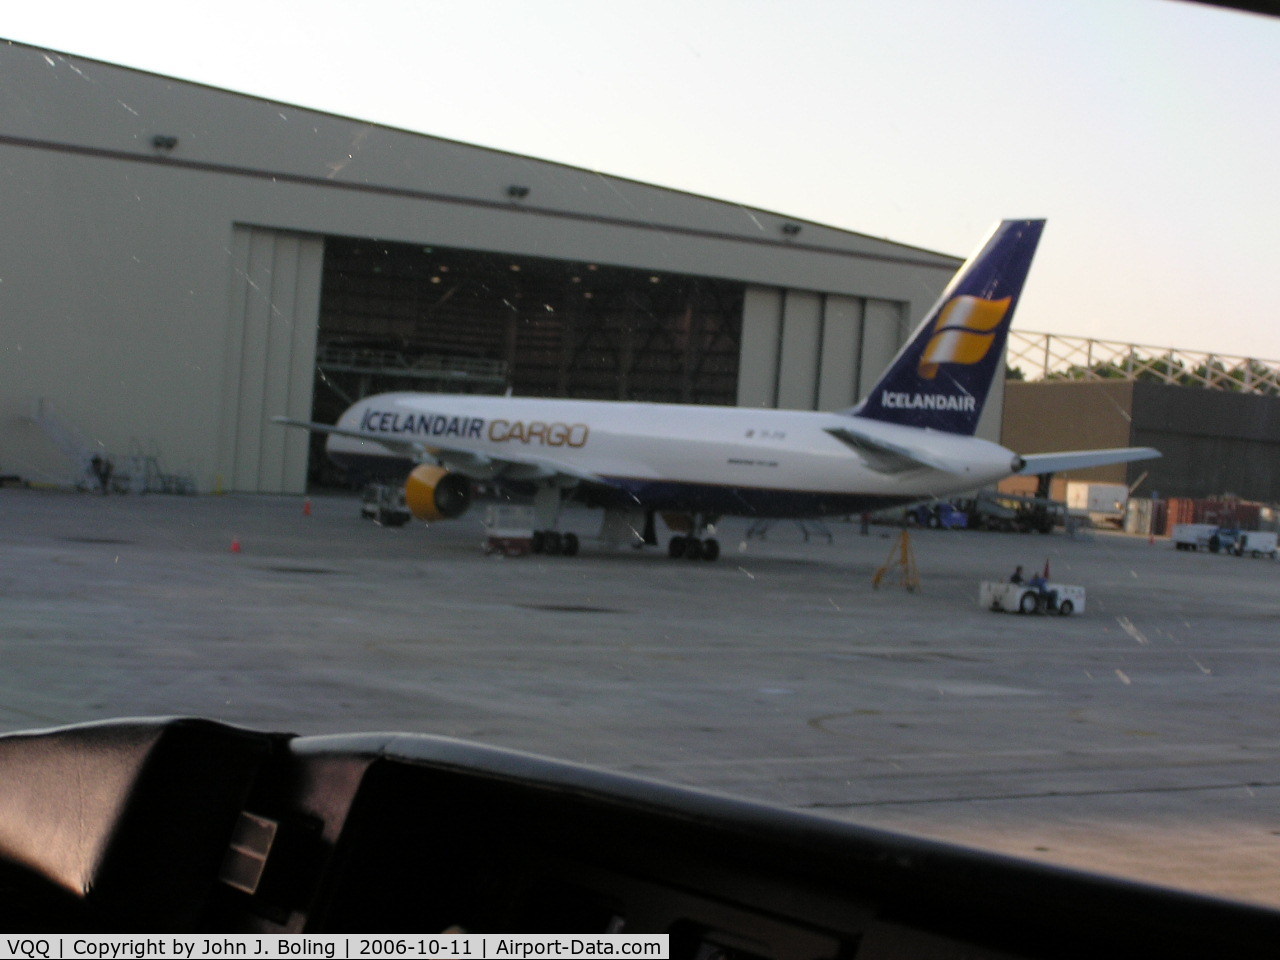 Cecil Airport (VQQ) - Mod hangar operated by Flightstar